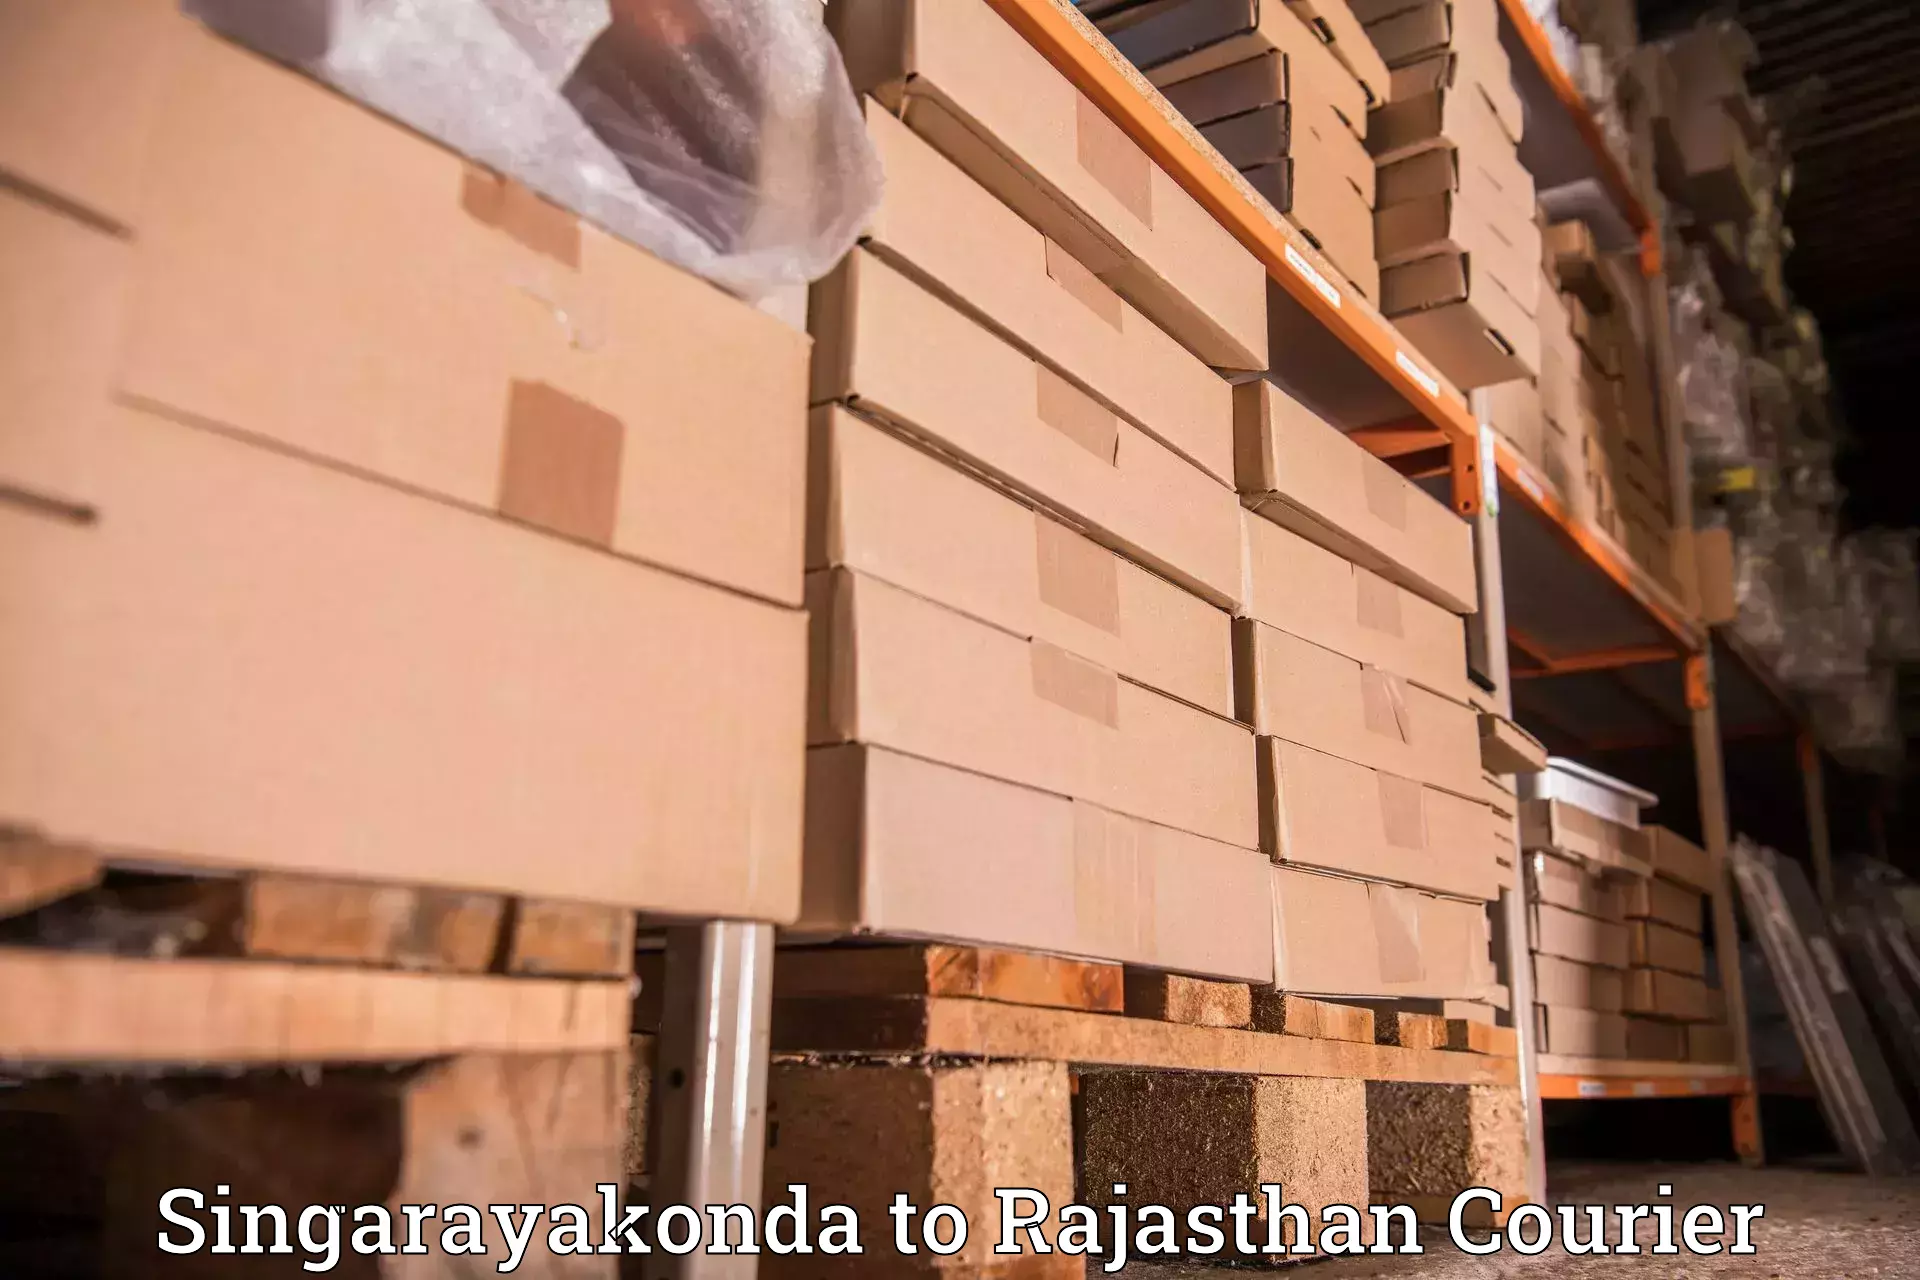 Courier service comparison Singarayakonda to Rajasthan